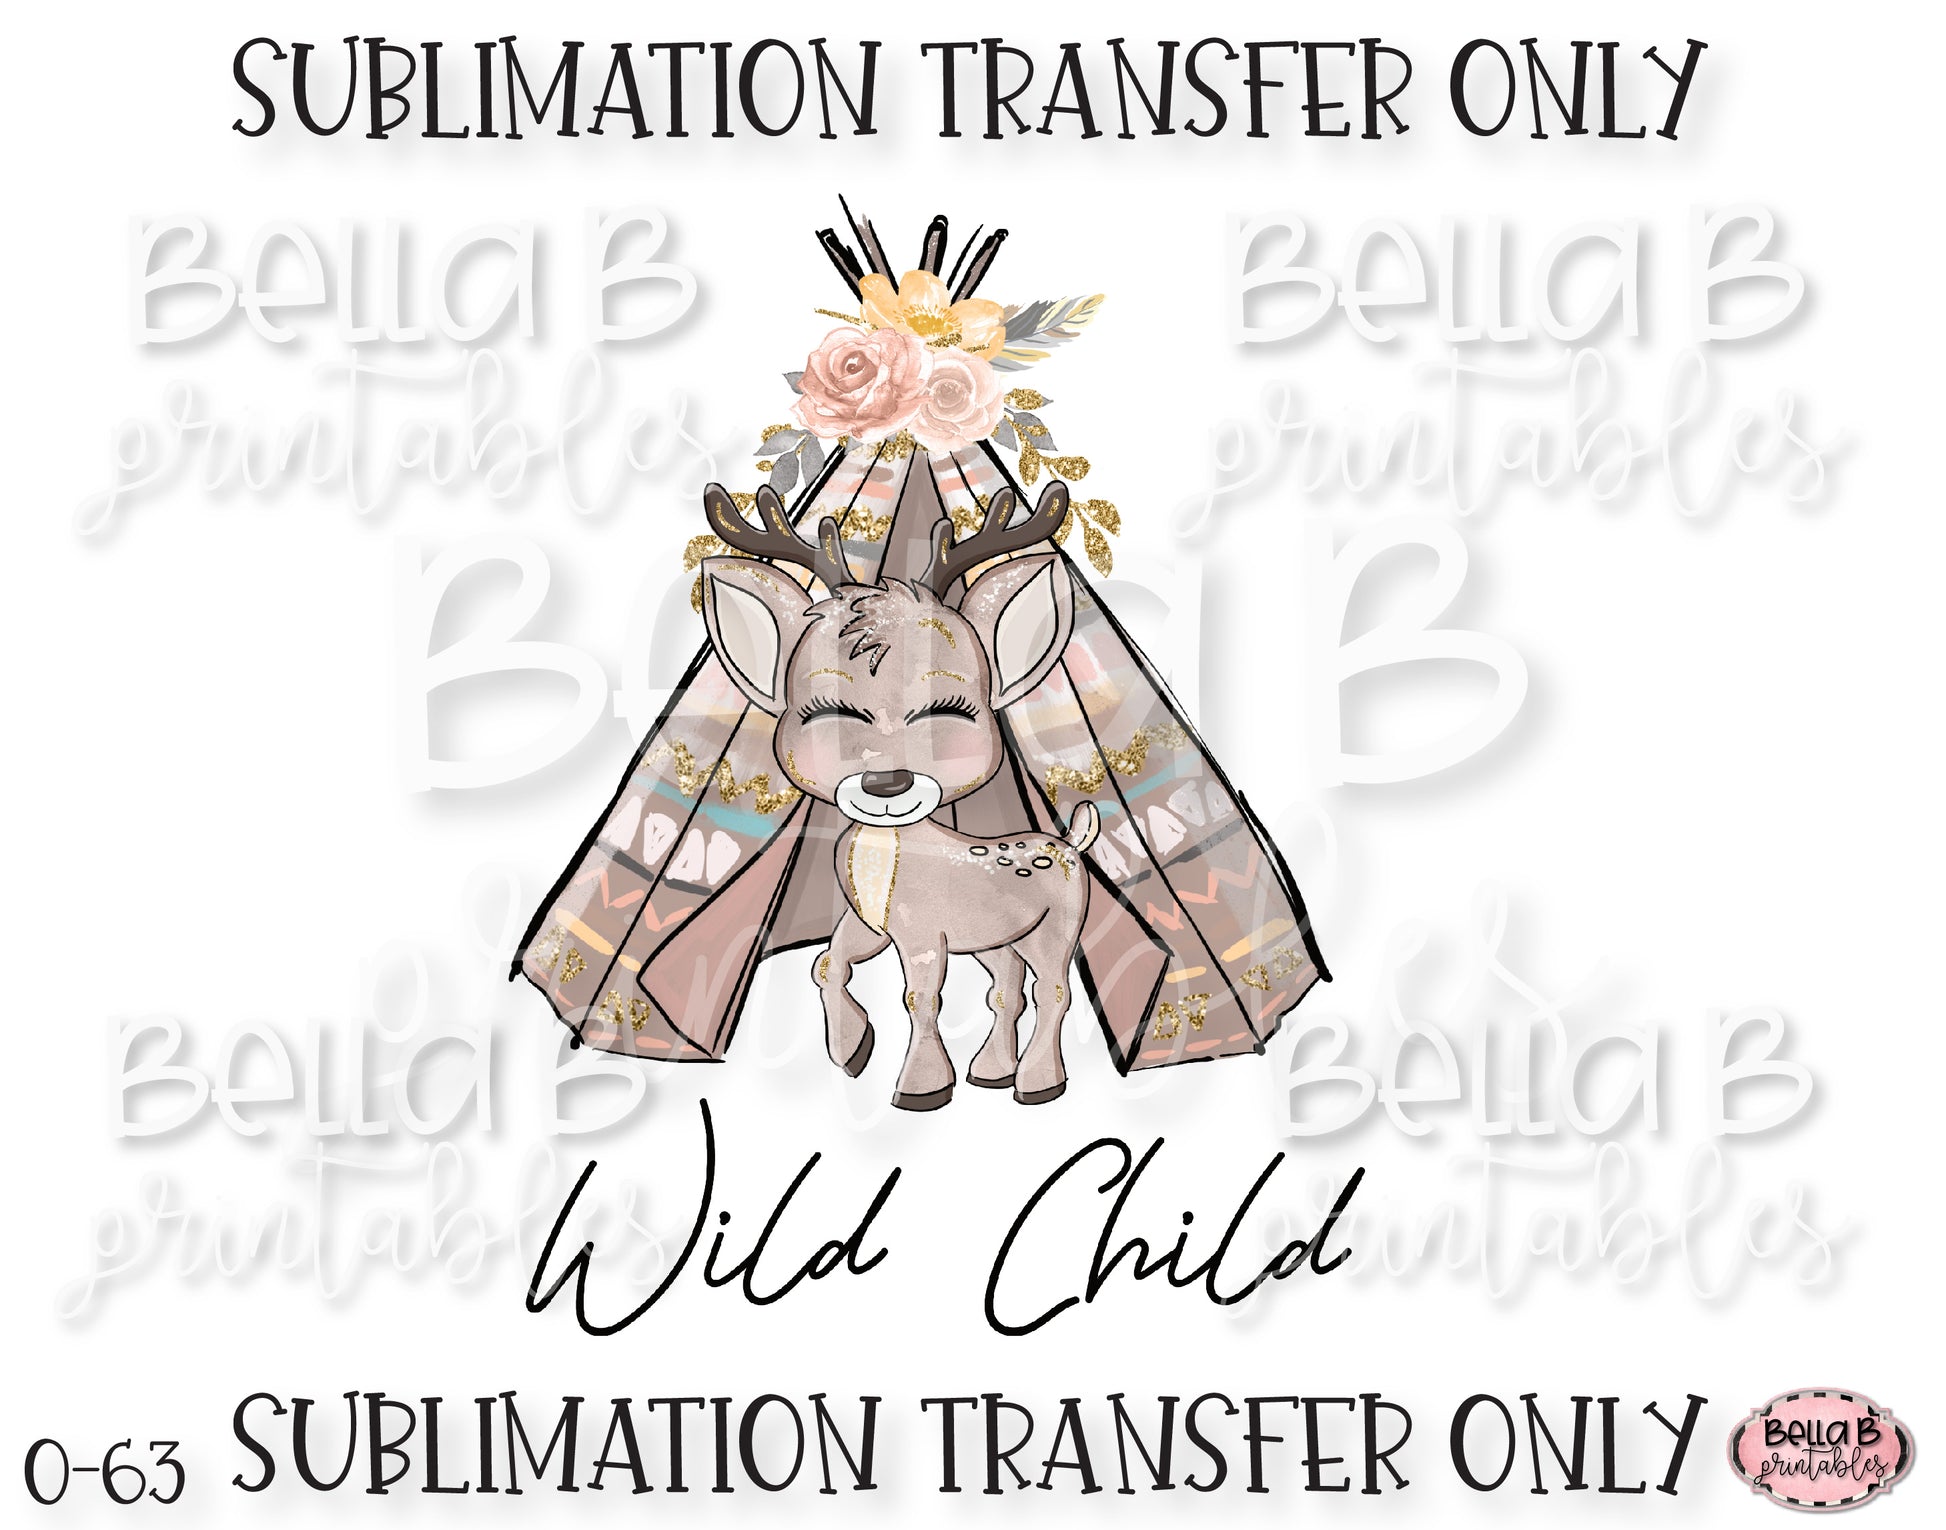 Kid Life Princess Print - Sublimation Transfer - Ready to Press